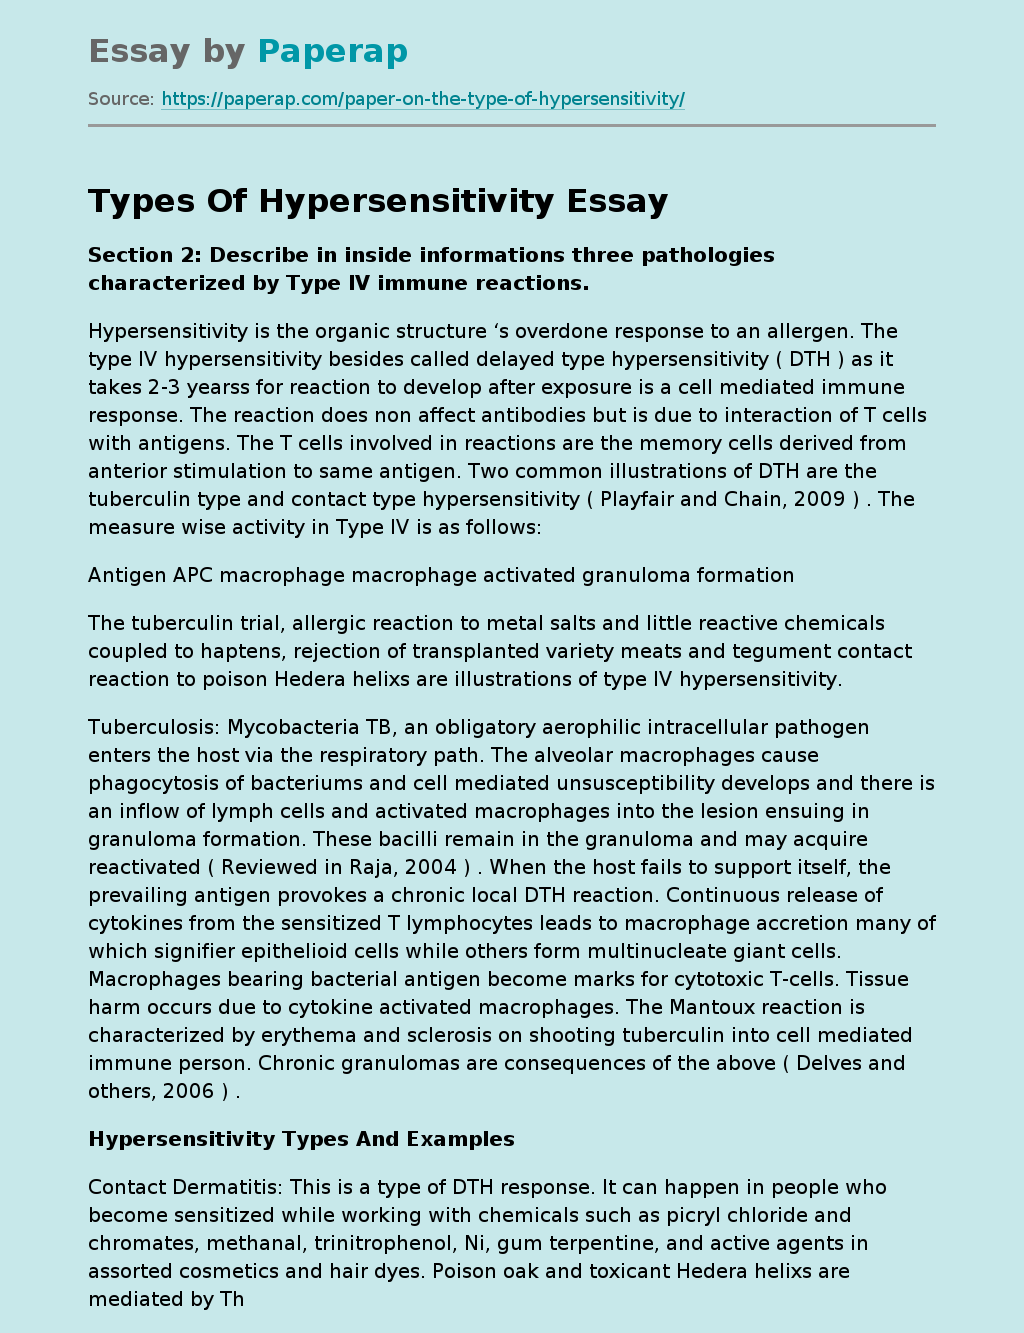 Types Of Hypersensitivity